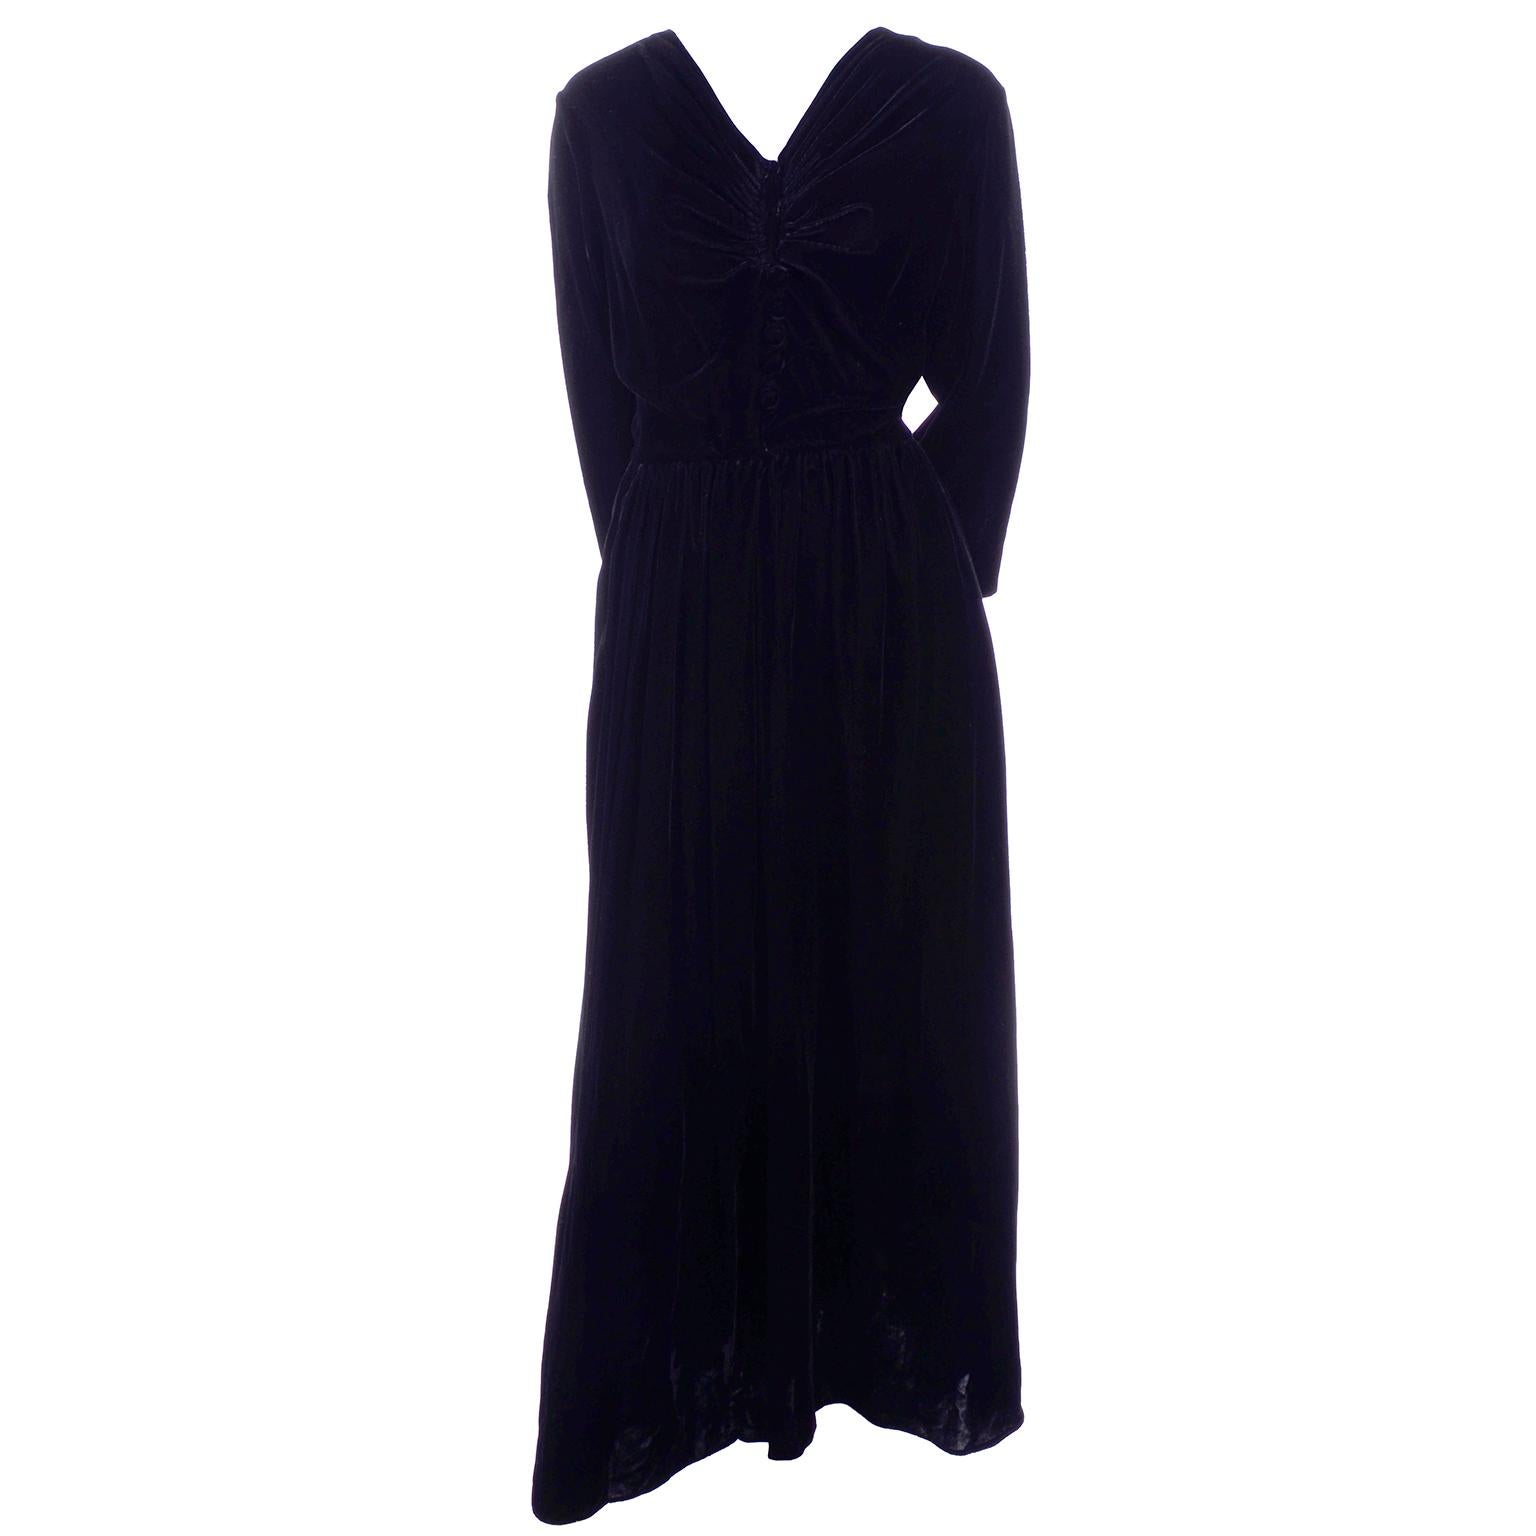 Vintage 1940s Black Velvet Evening Dress or Hostess Gown For Sale at ...